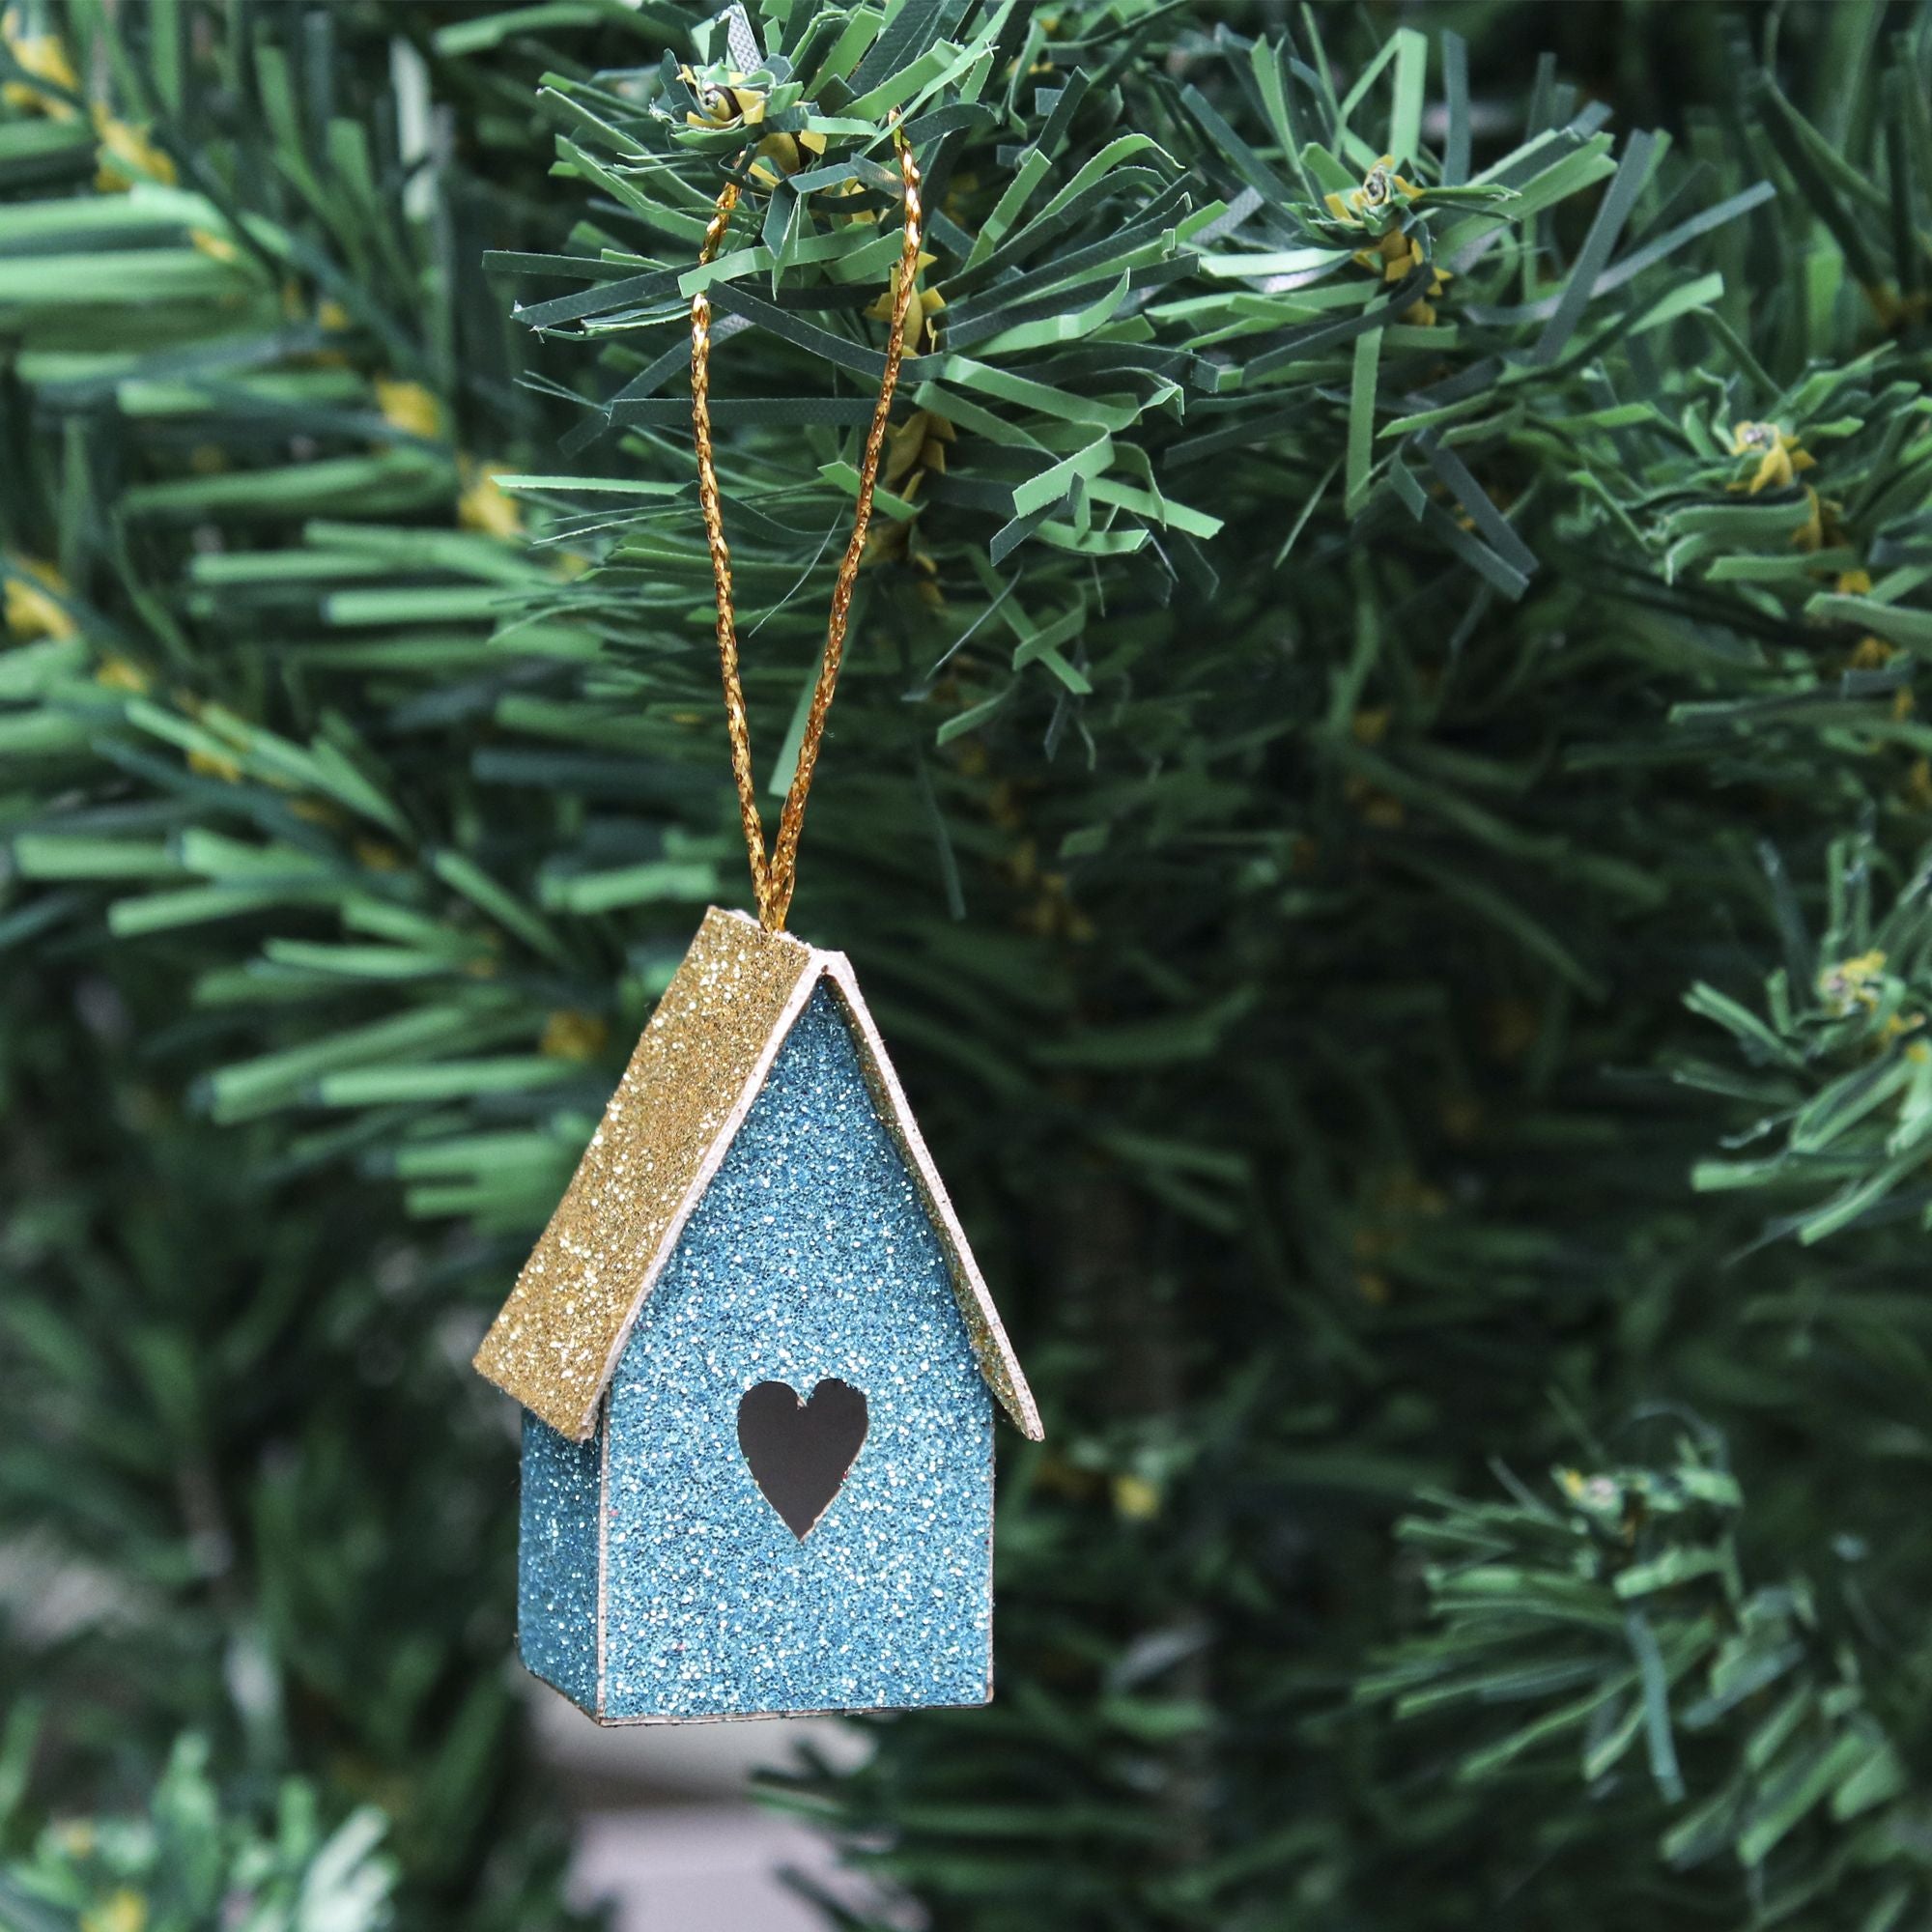 Handmade Christmas Ornaments - Glitter Bird house H 1.5 X W 1.5 X L 1inch, Blue, 8pc